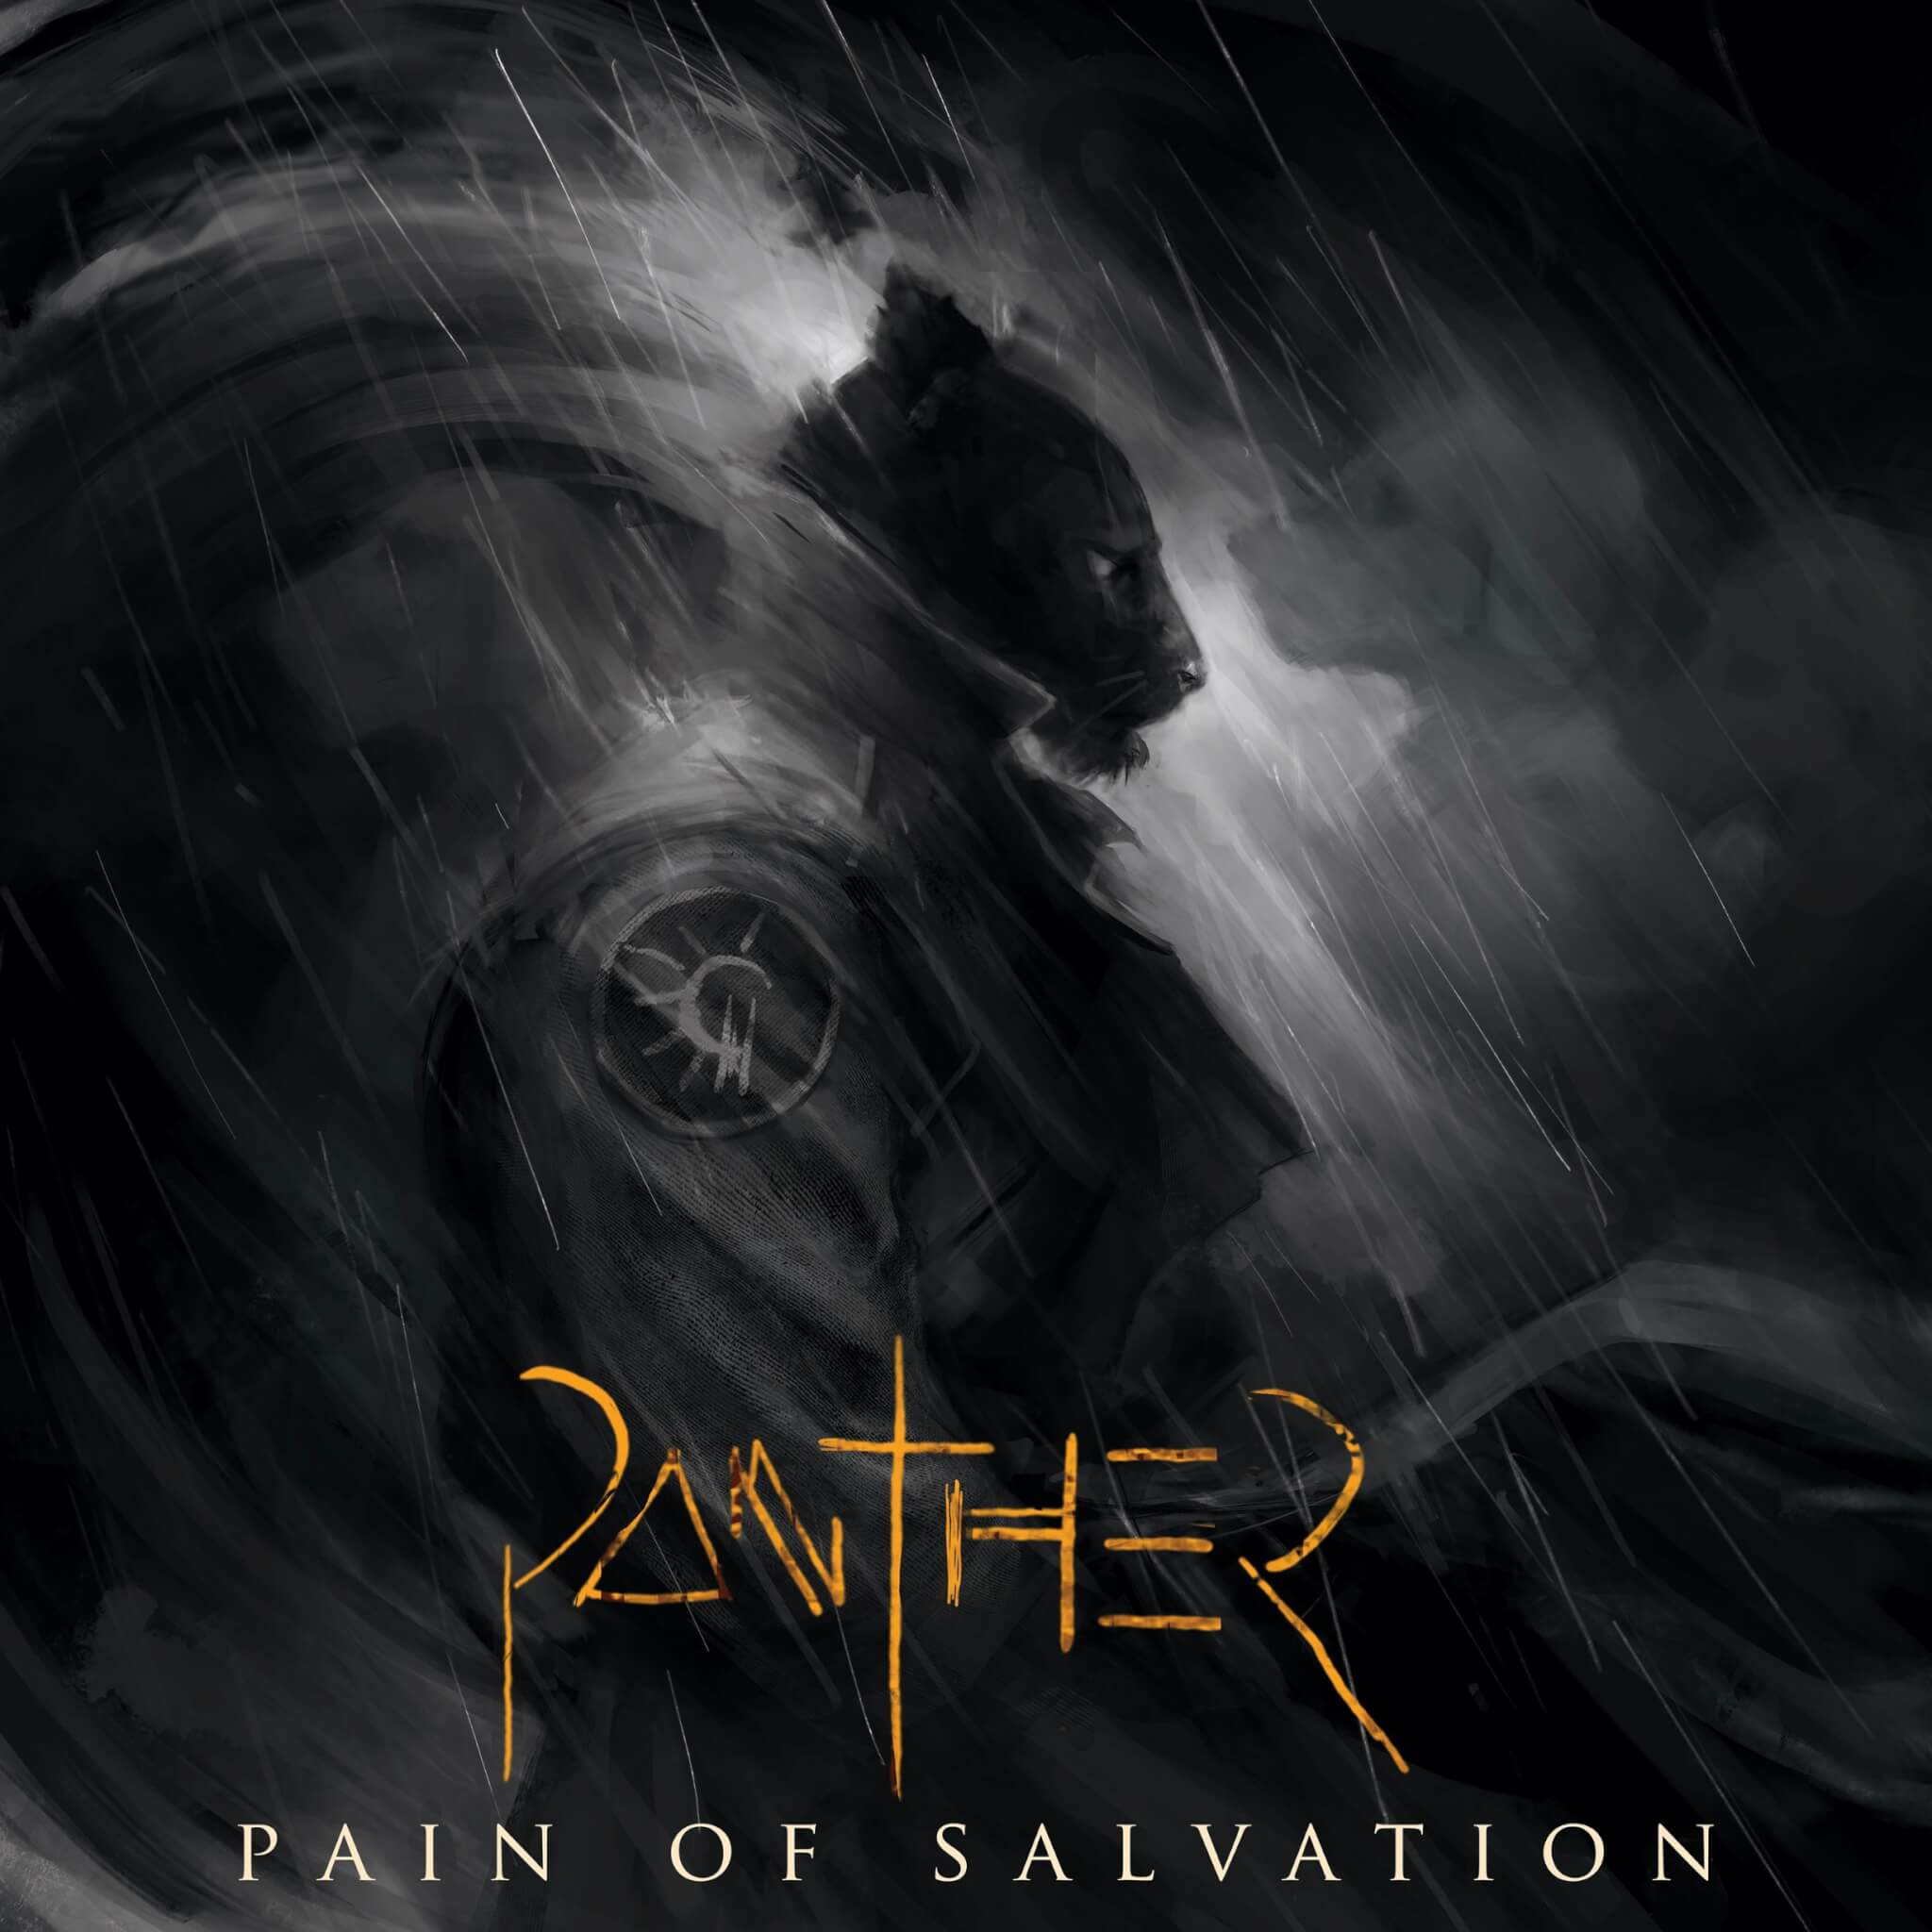 Pain of Salvation: Panther